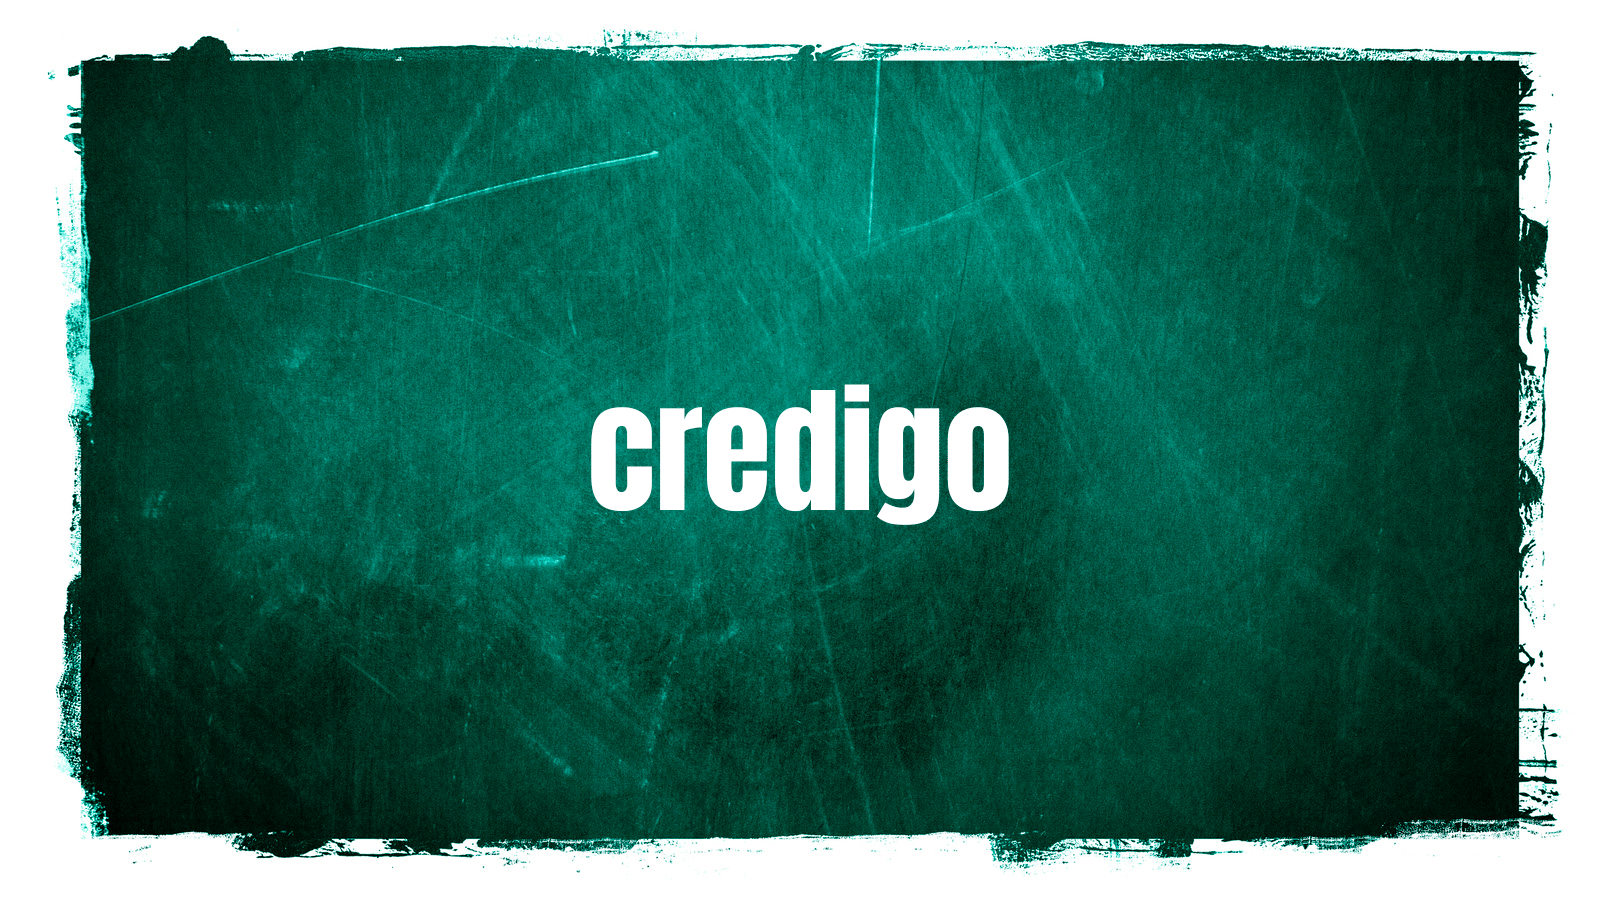 Credigo Kokemuksia